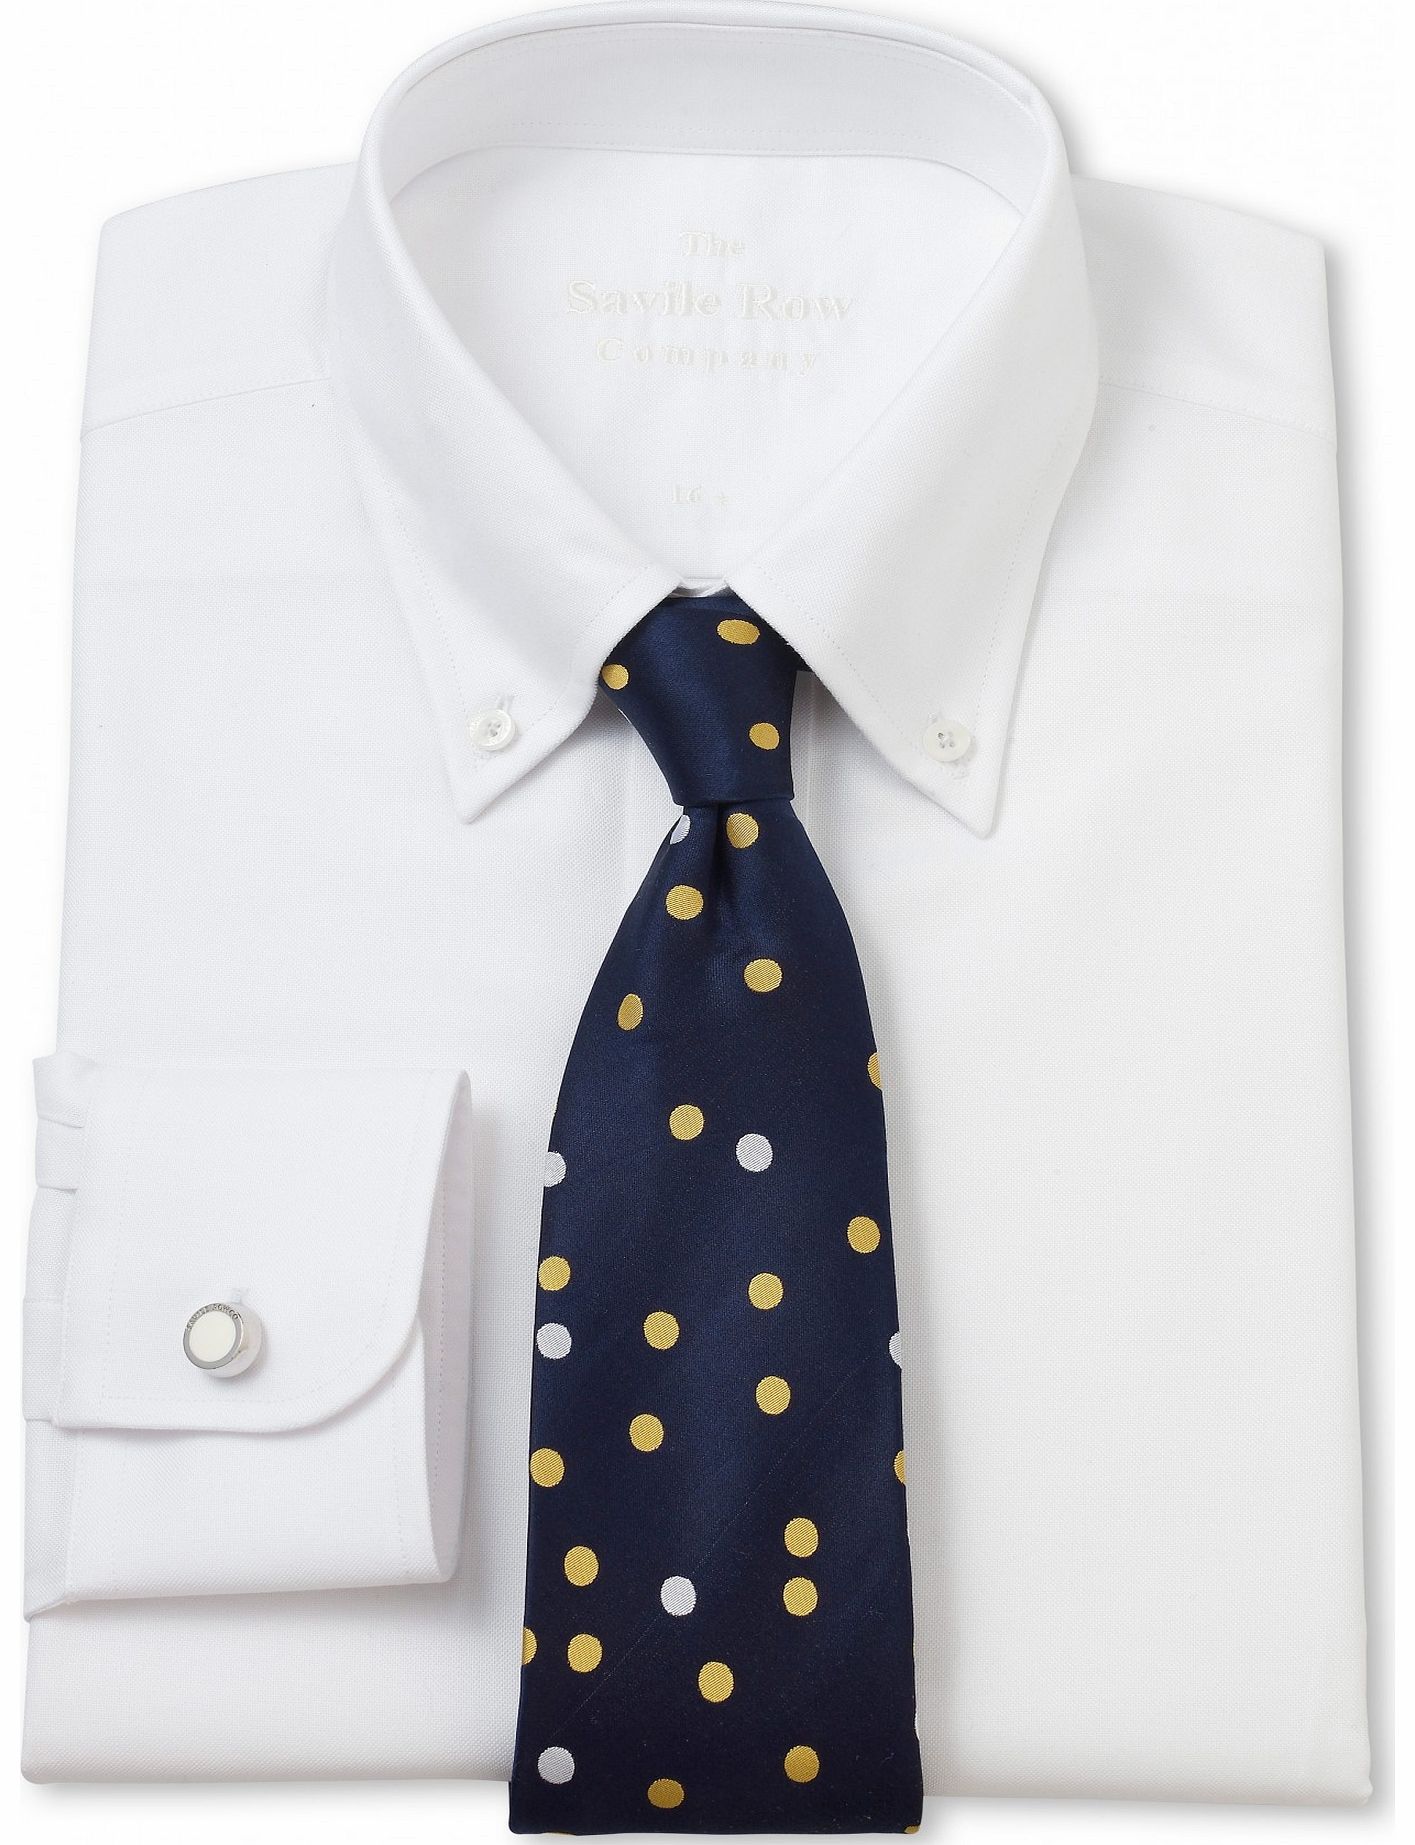 Savile Row Company White Oxford Button Down Slim Fit Shirt 15``